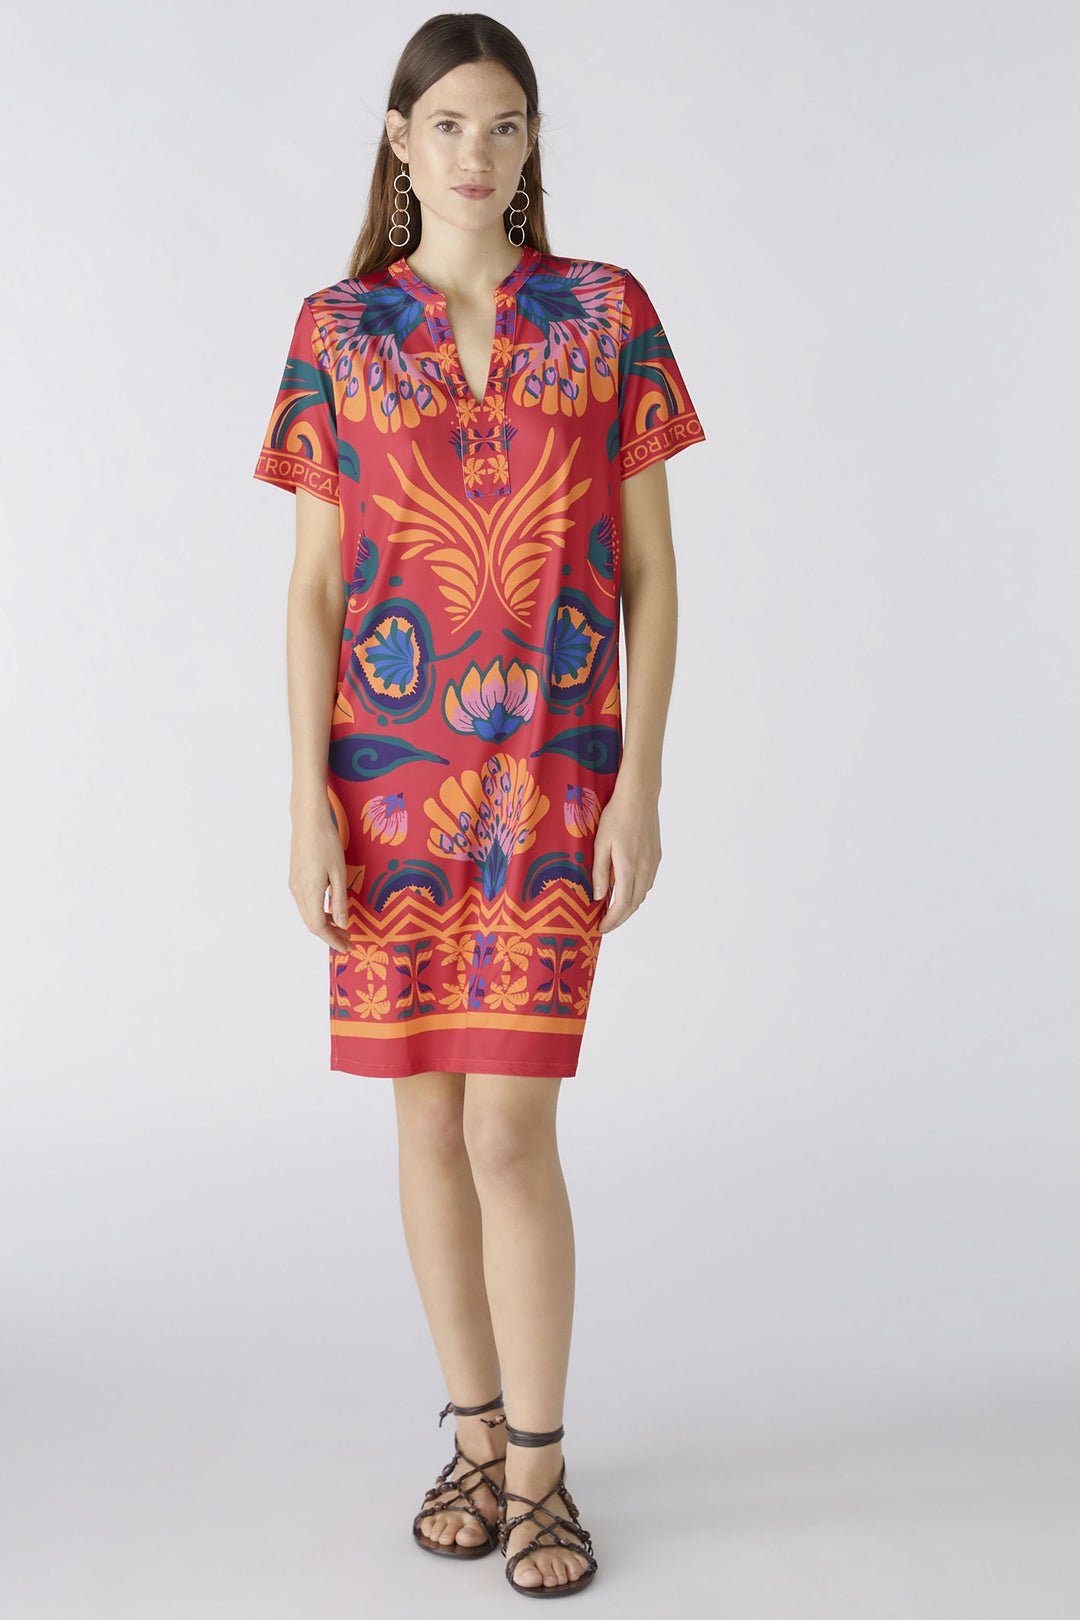 Oui 87562 Pink Orange Tropical Print Short Sleeve Dress - Dotique